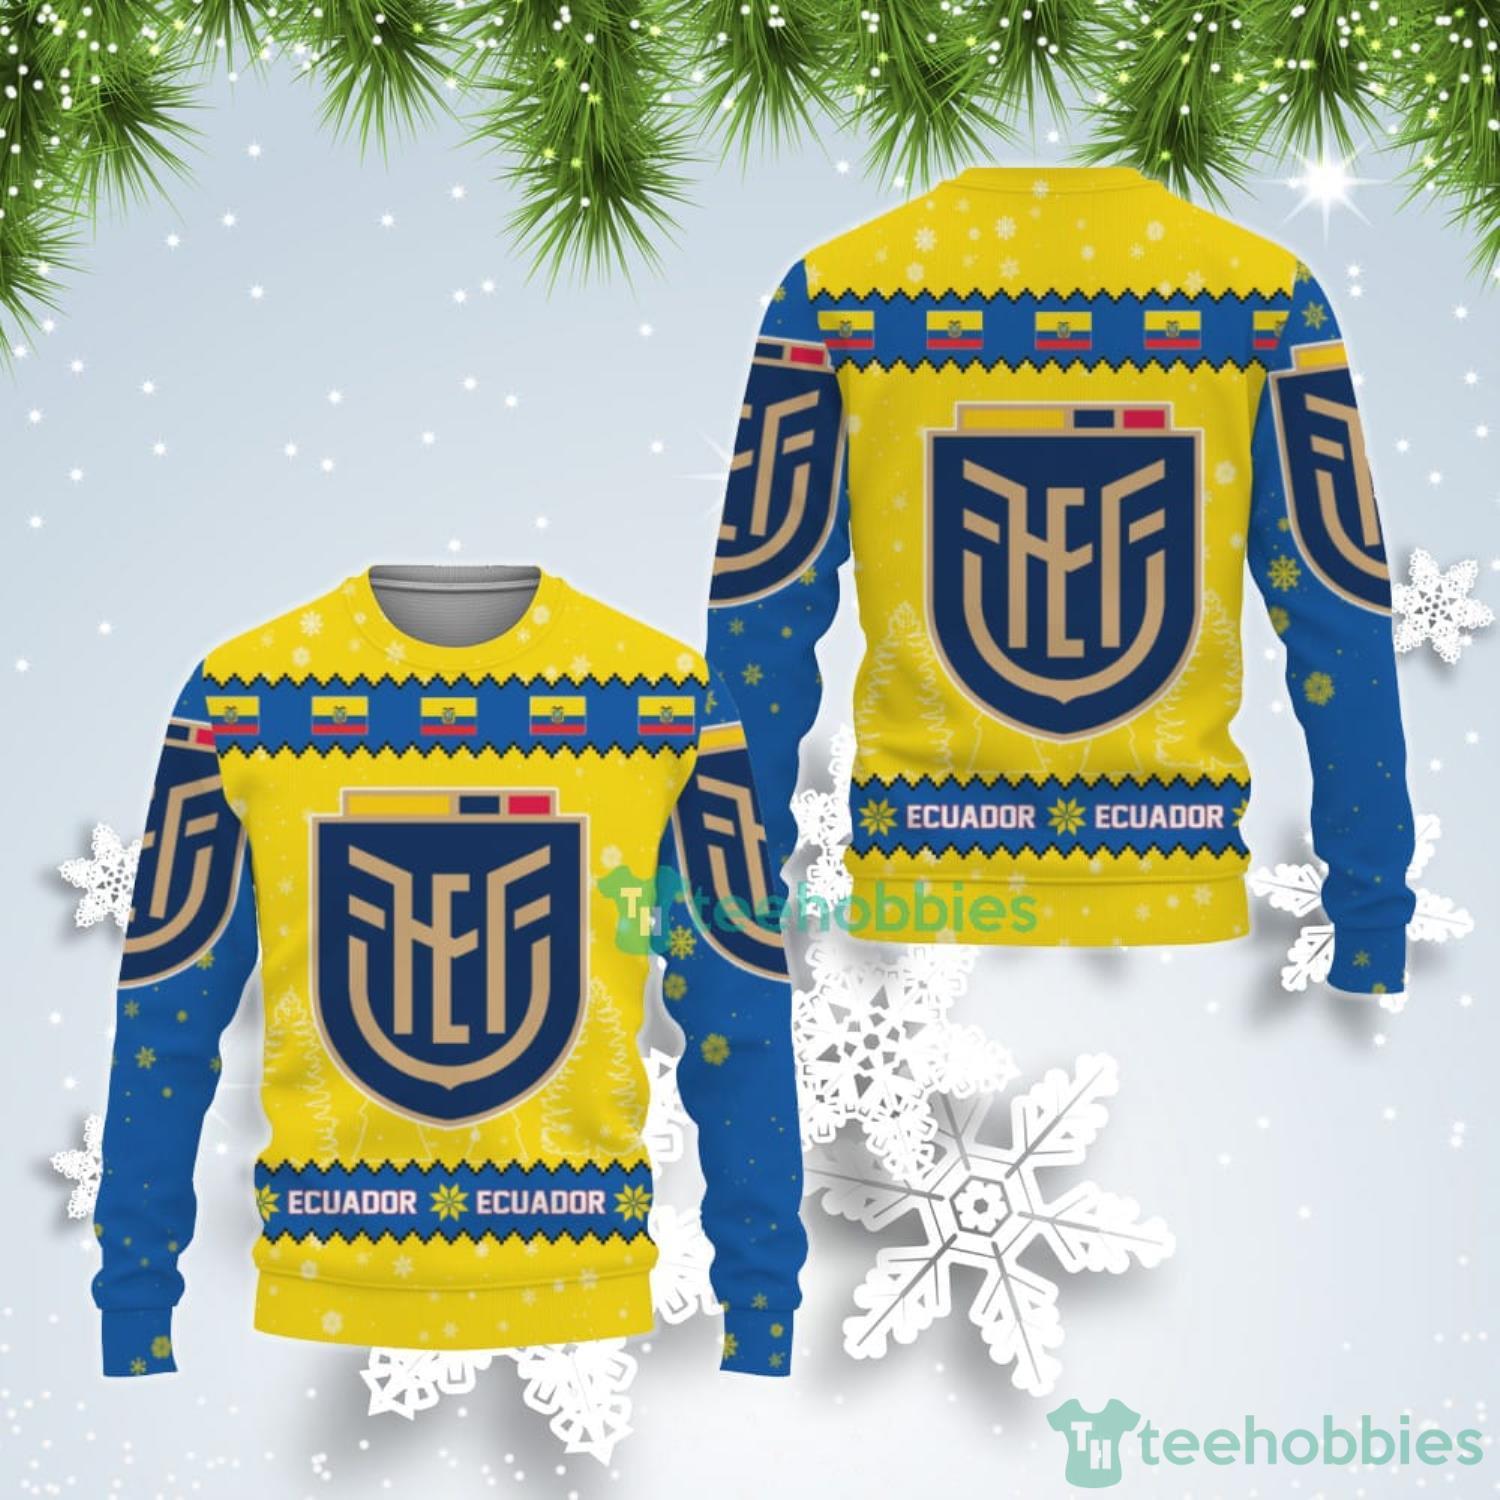 Ecuador National Soccer Team Qatar World Cup 2022 Winter Season Ugly Christmas Sweater Product Photo 1